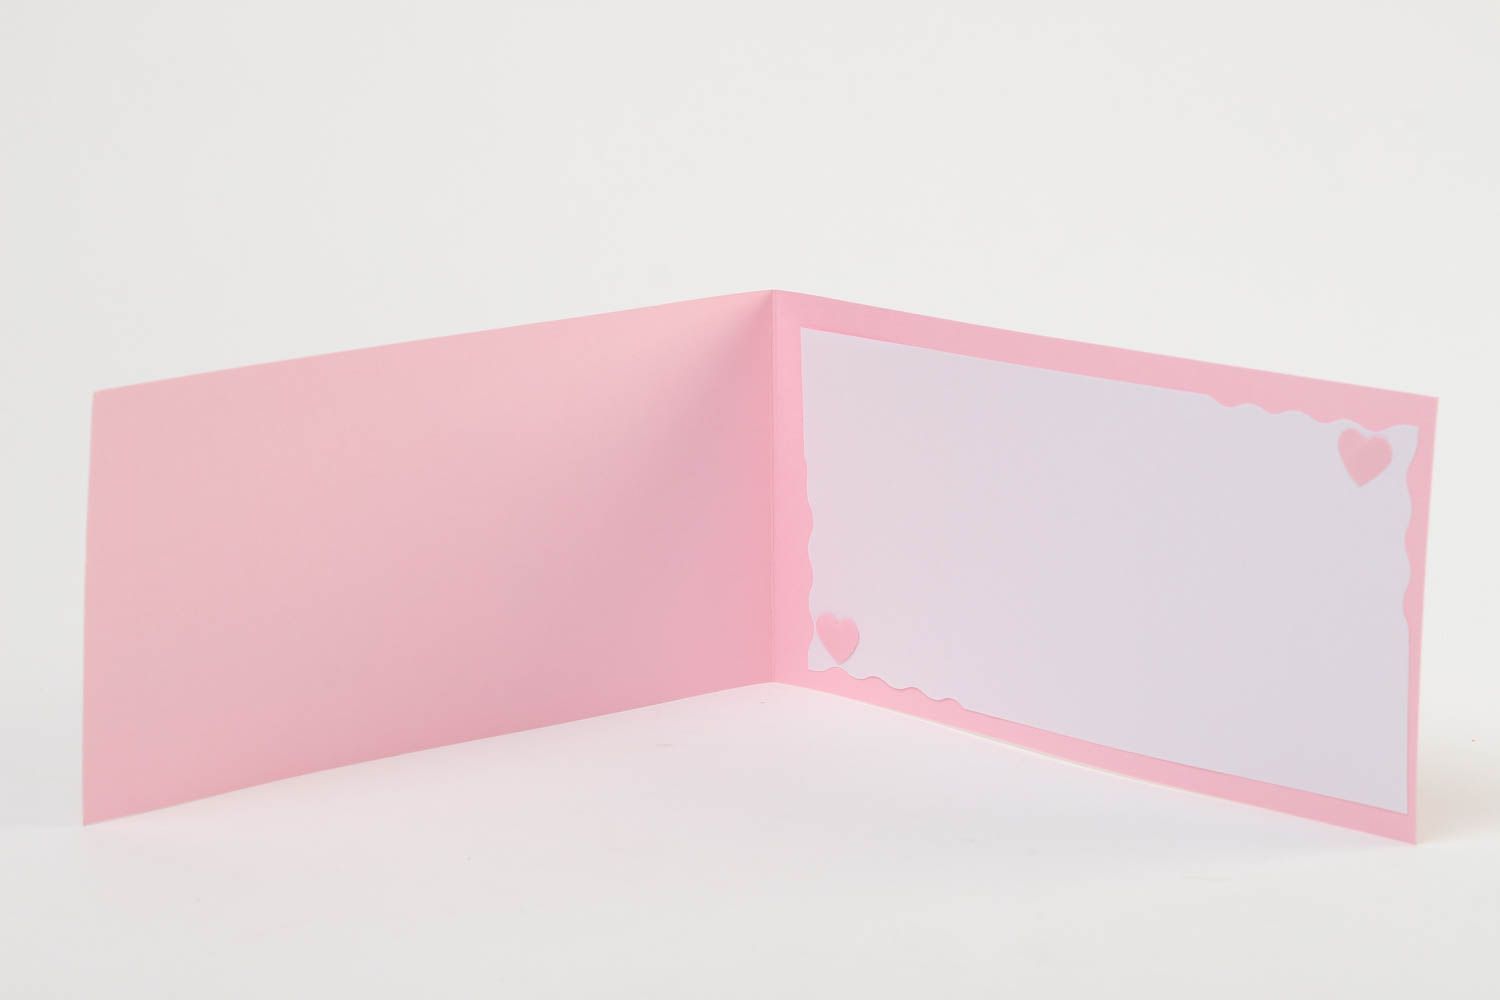 Handmade schöne Grusskarten Scrapbook Karten Papier Karten bunt rosa modisch foto 3